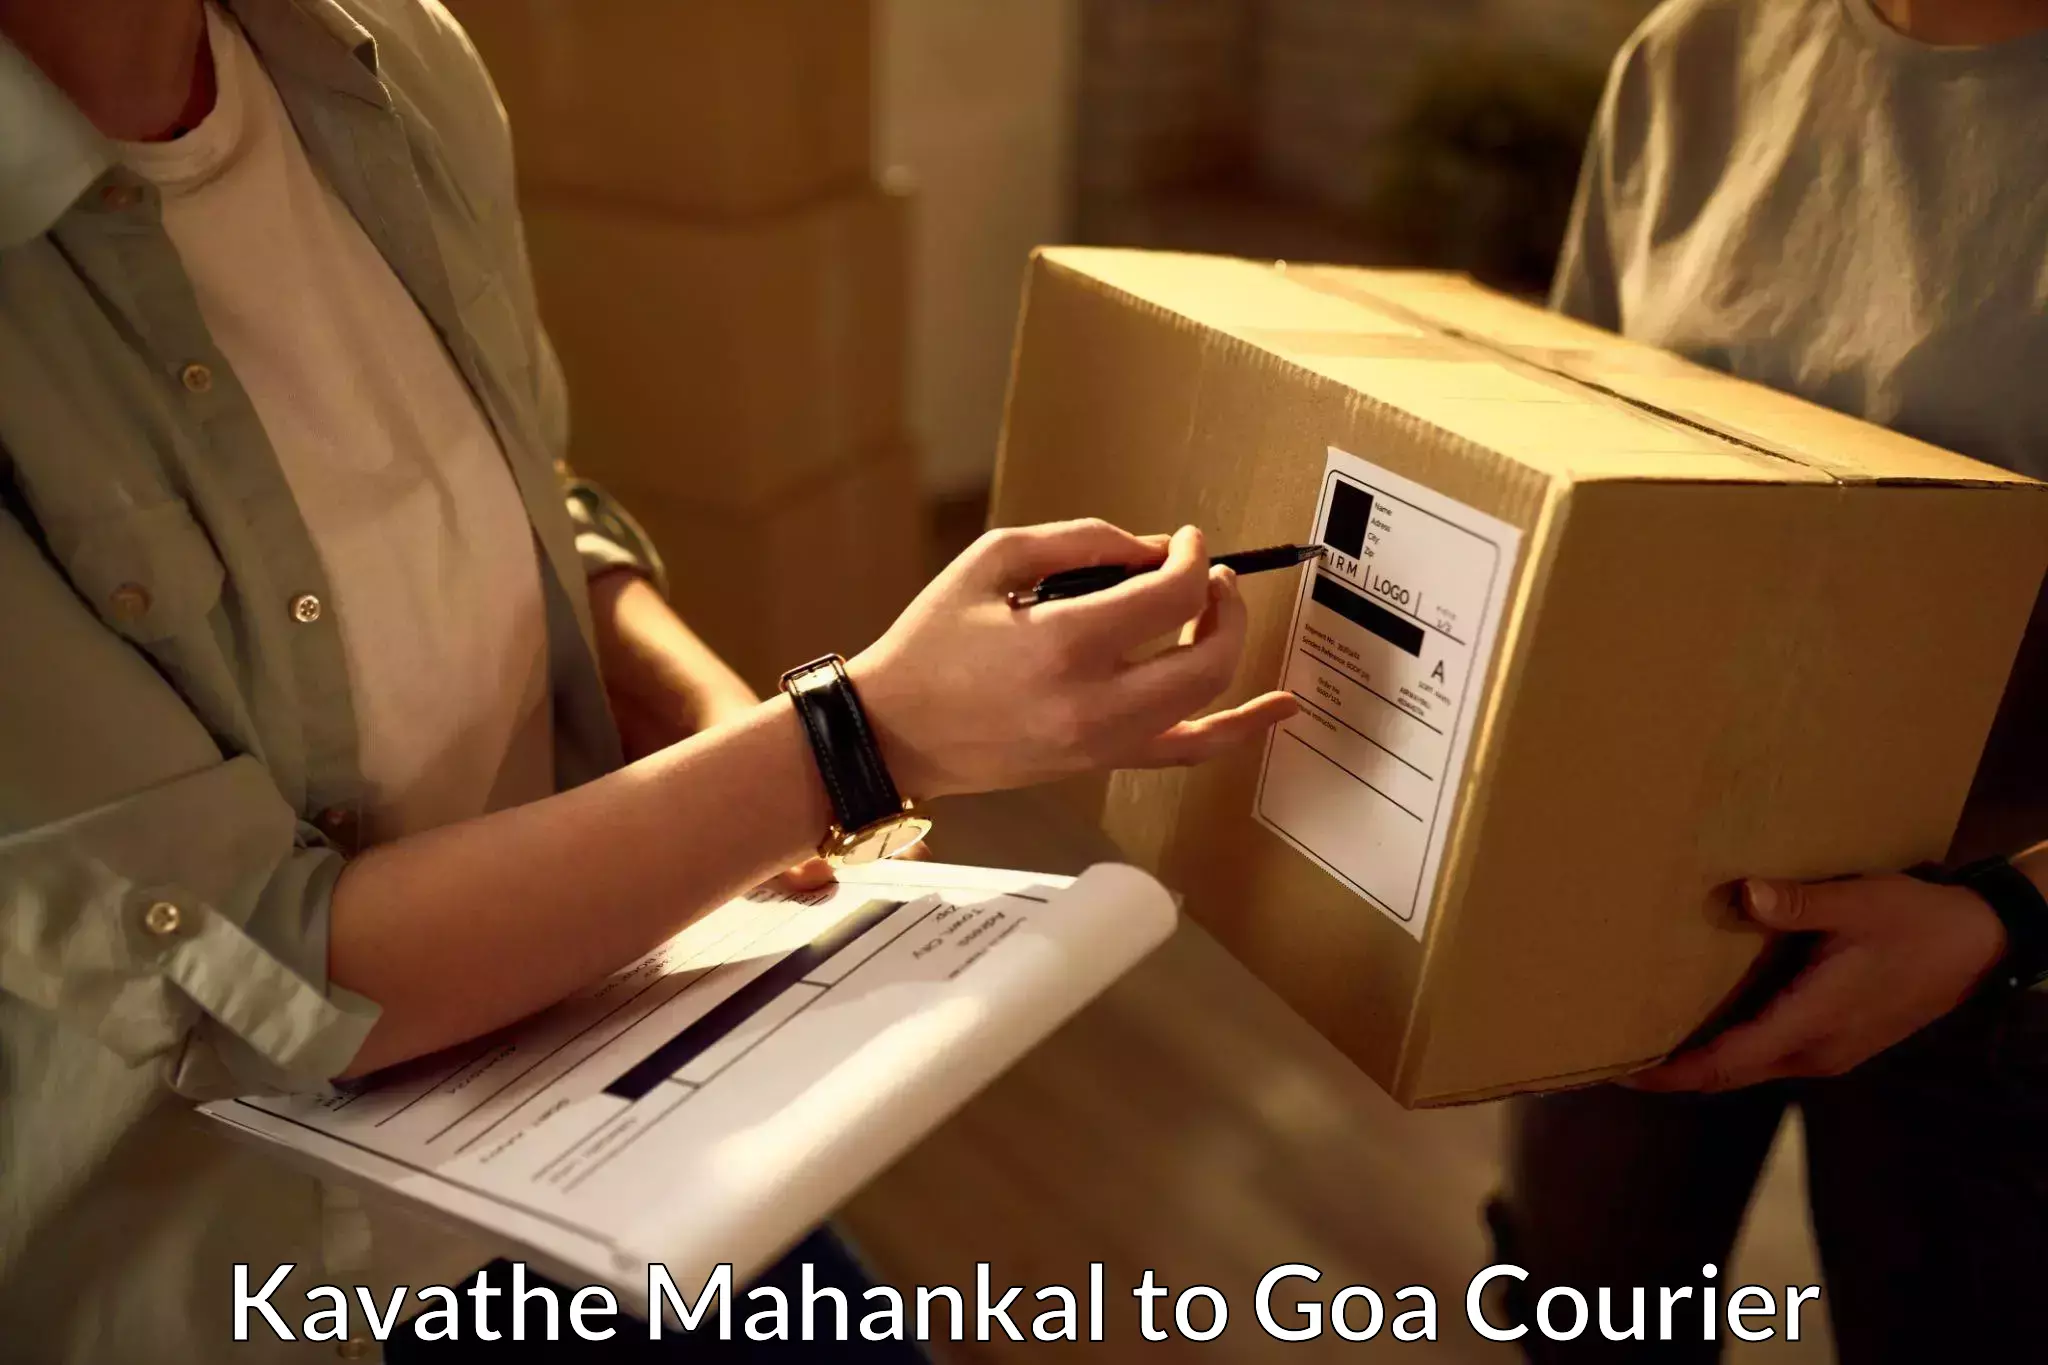 Courier service comparison Kavathe Mahankal to South Goa